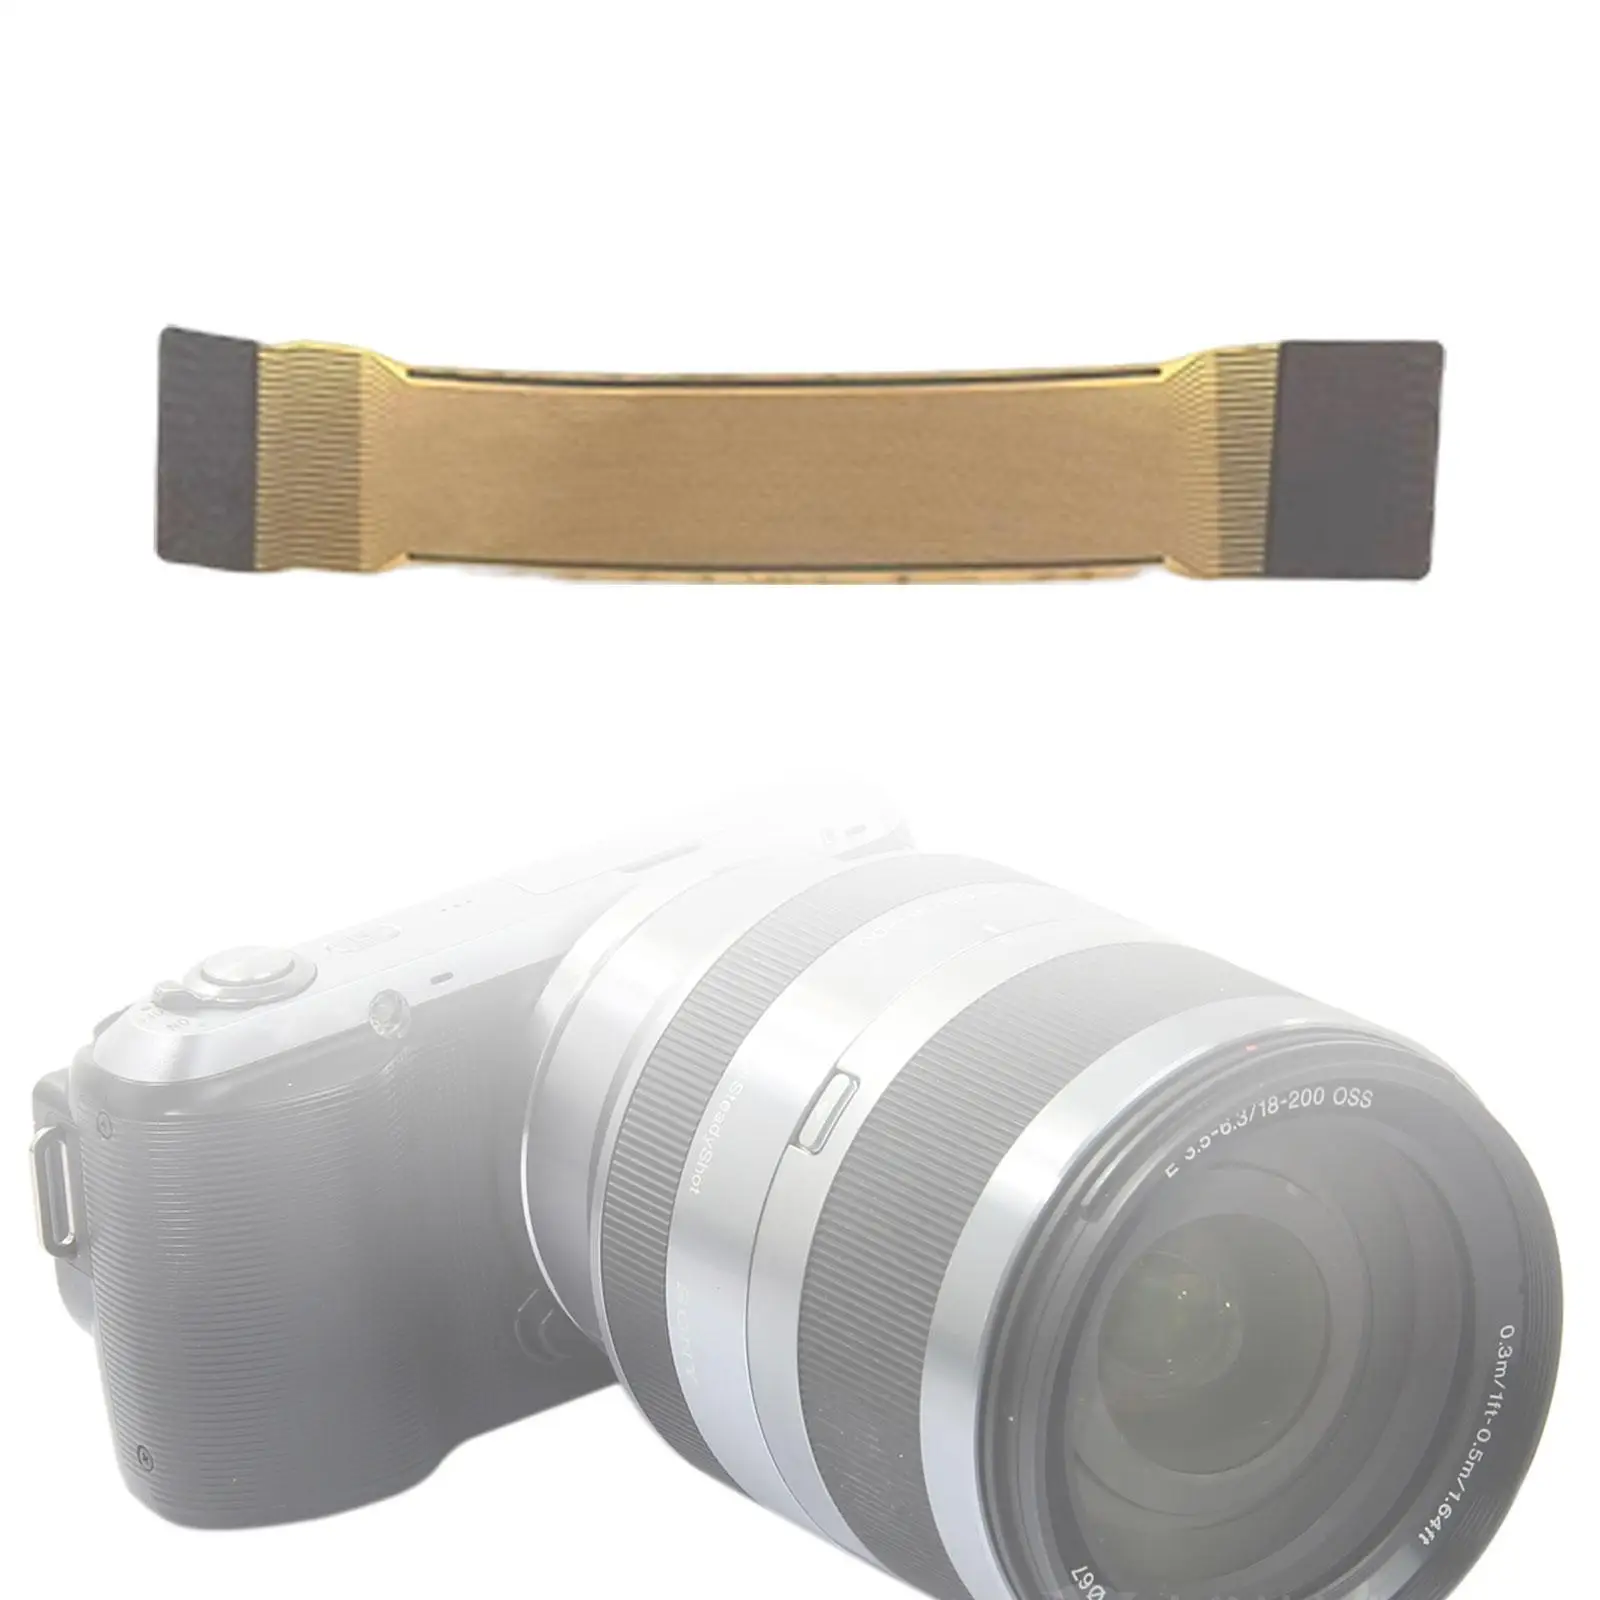 Camera Lens Flex Cable Accessories Replace Parts Durable Fpc Lens Line for 18-200mm